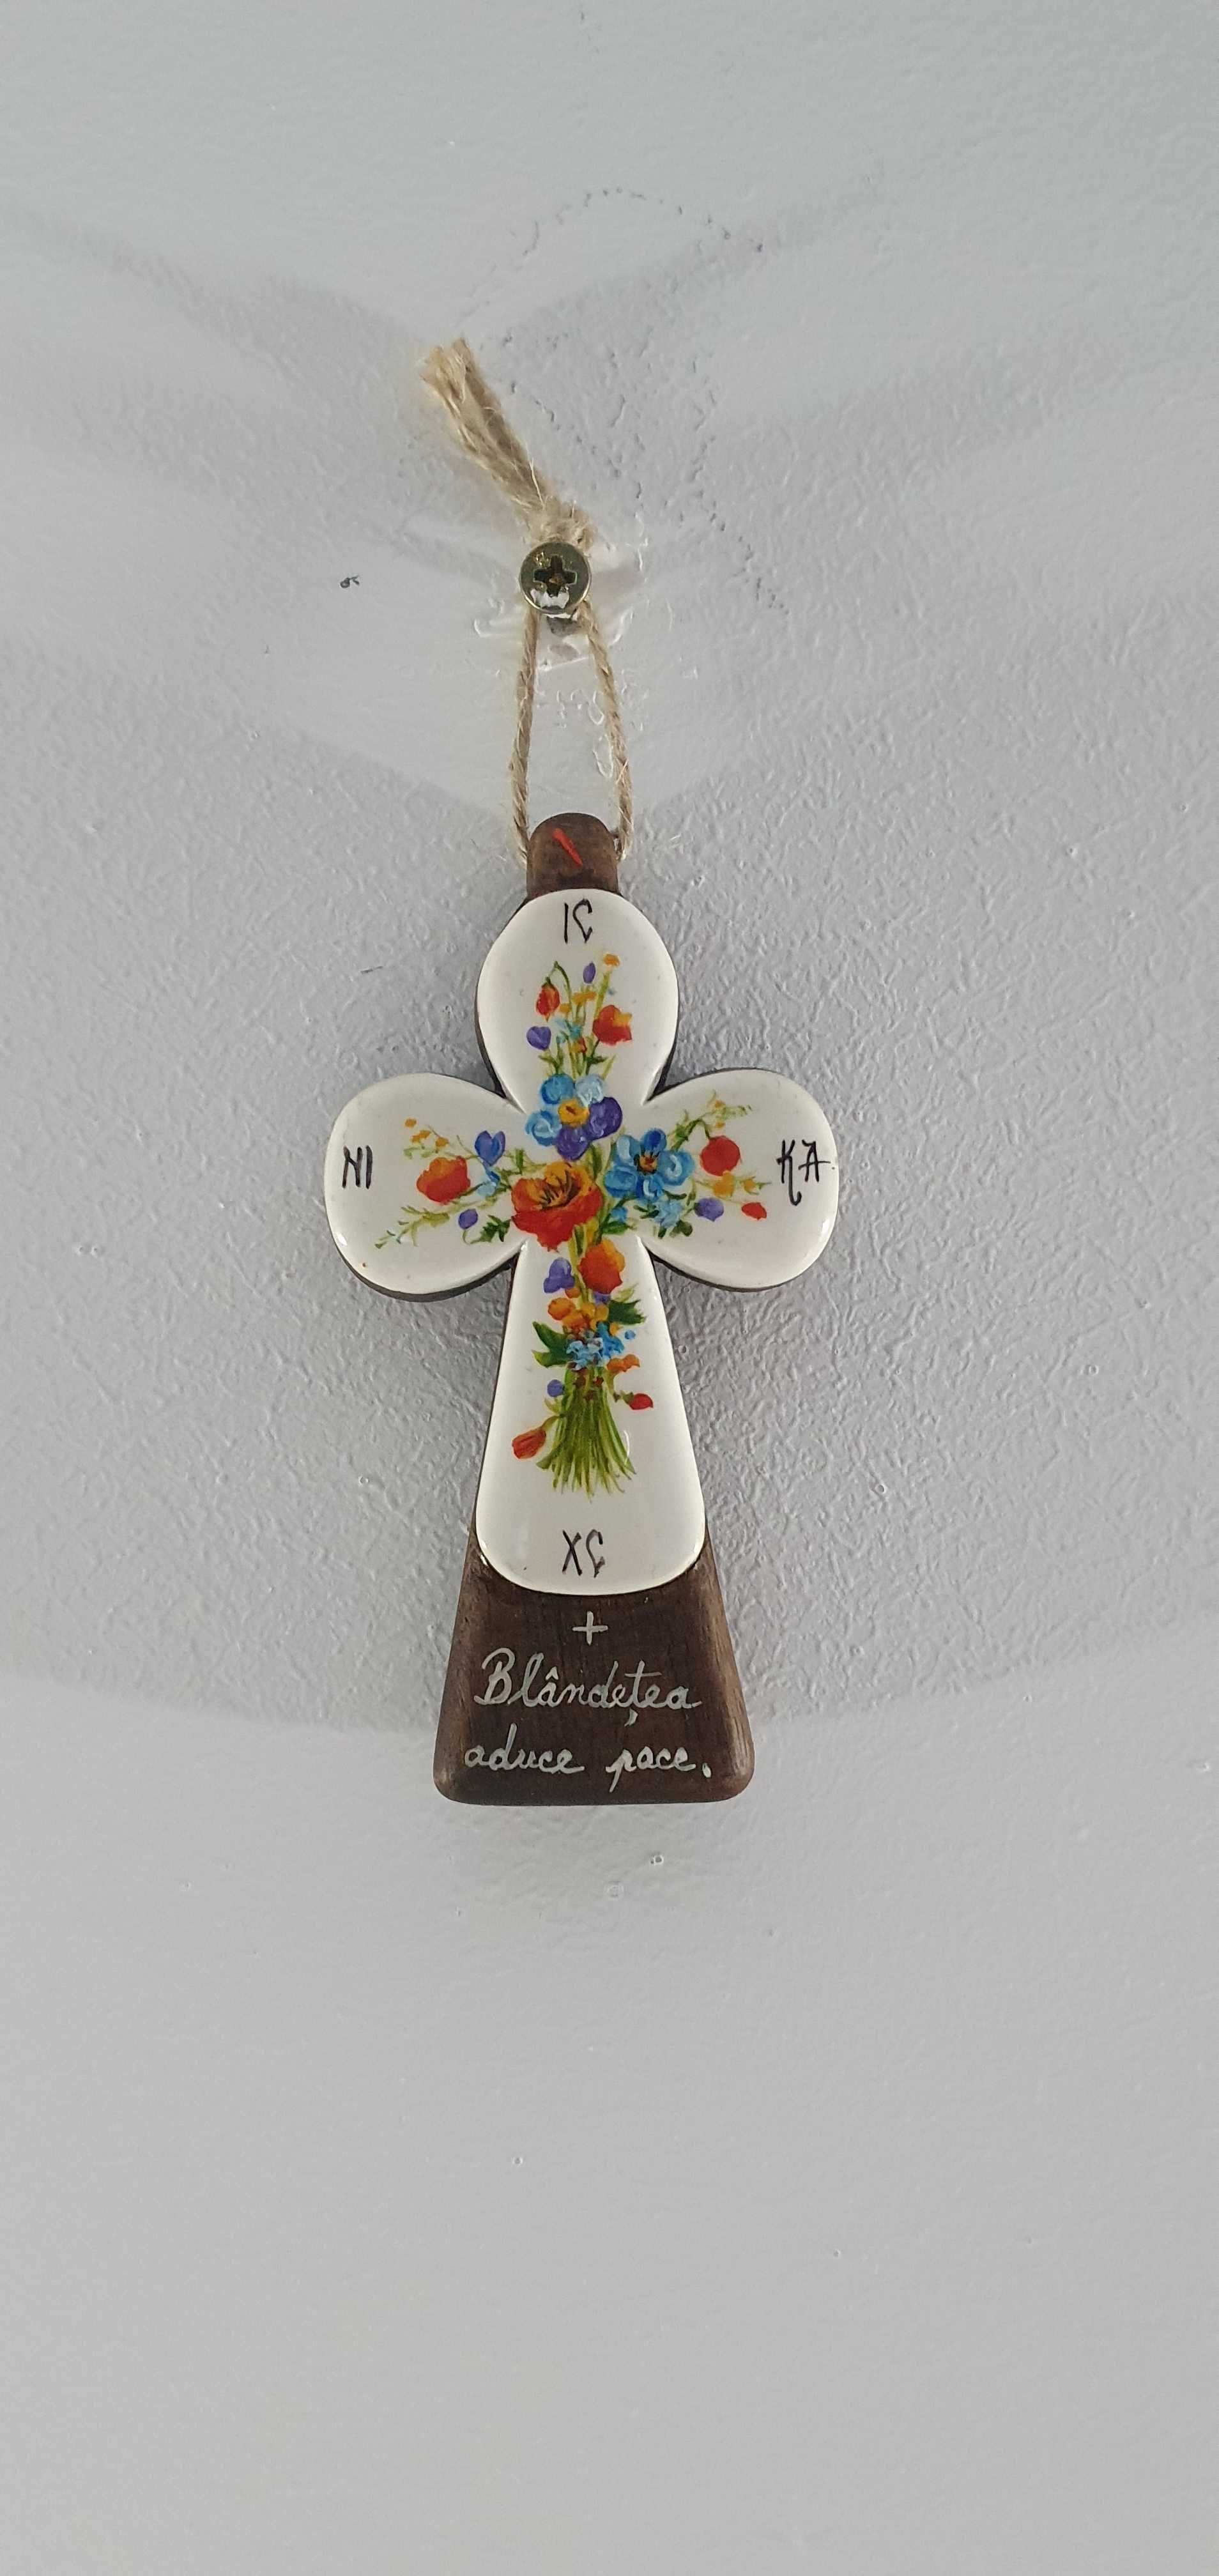 Cruce/icoana lemn pictata, cu flori, pasari,handmade, unicat